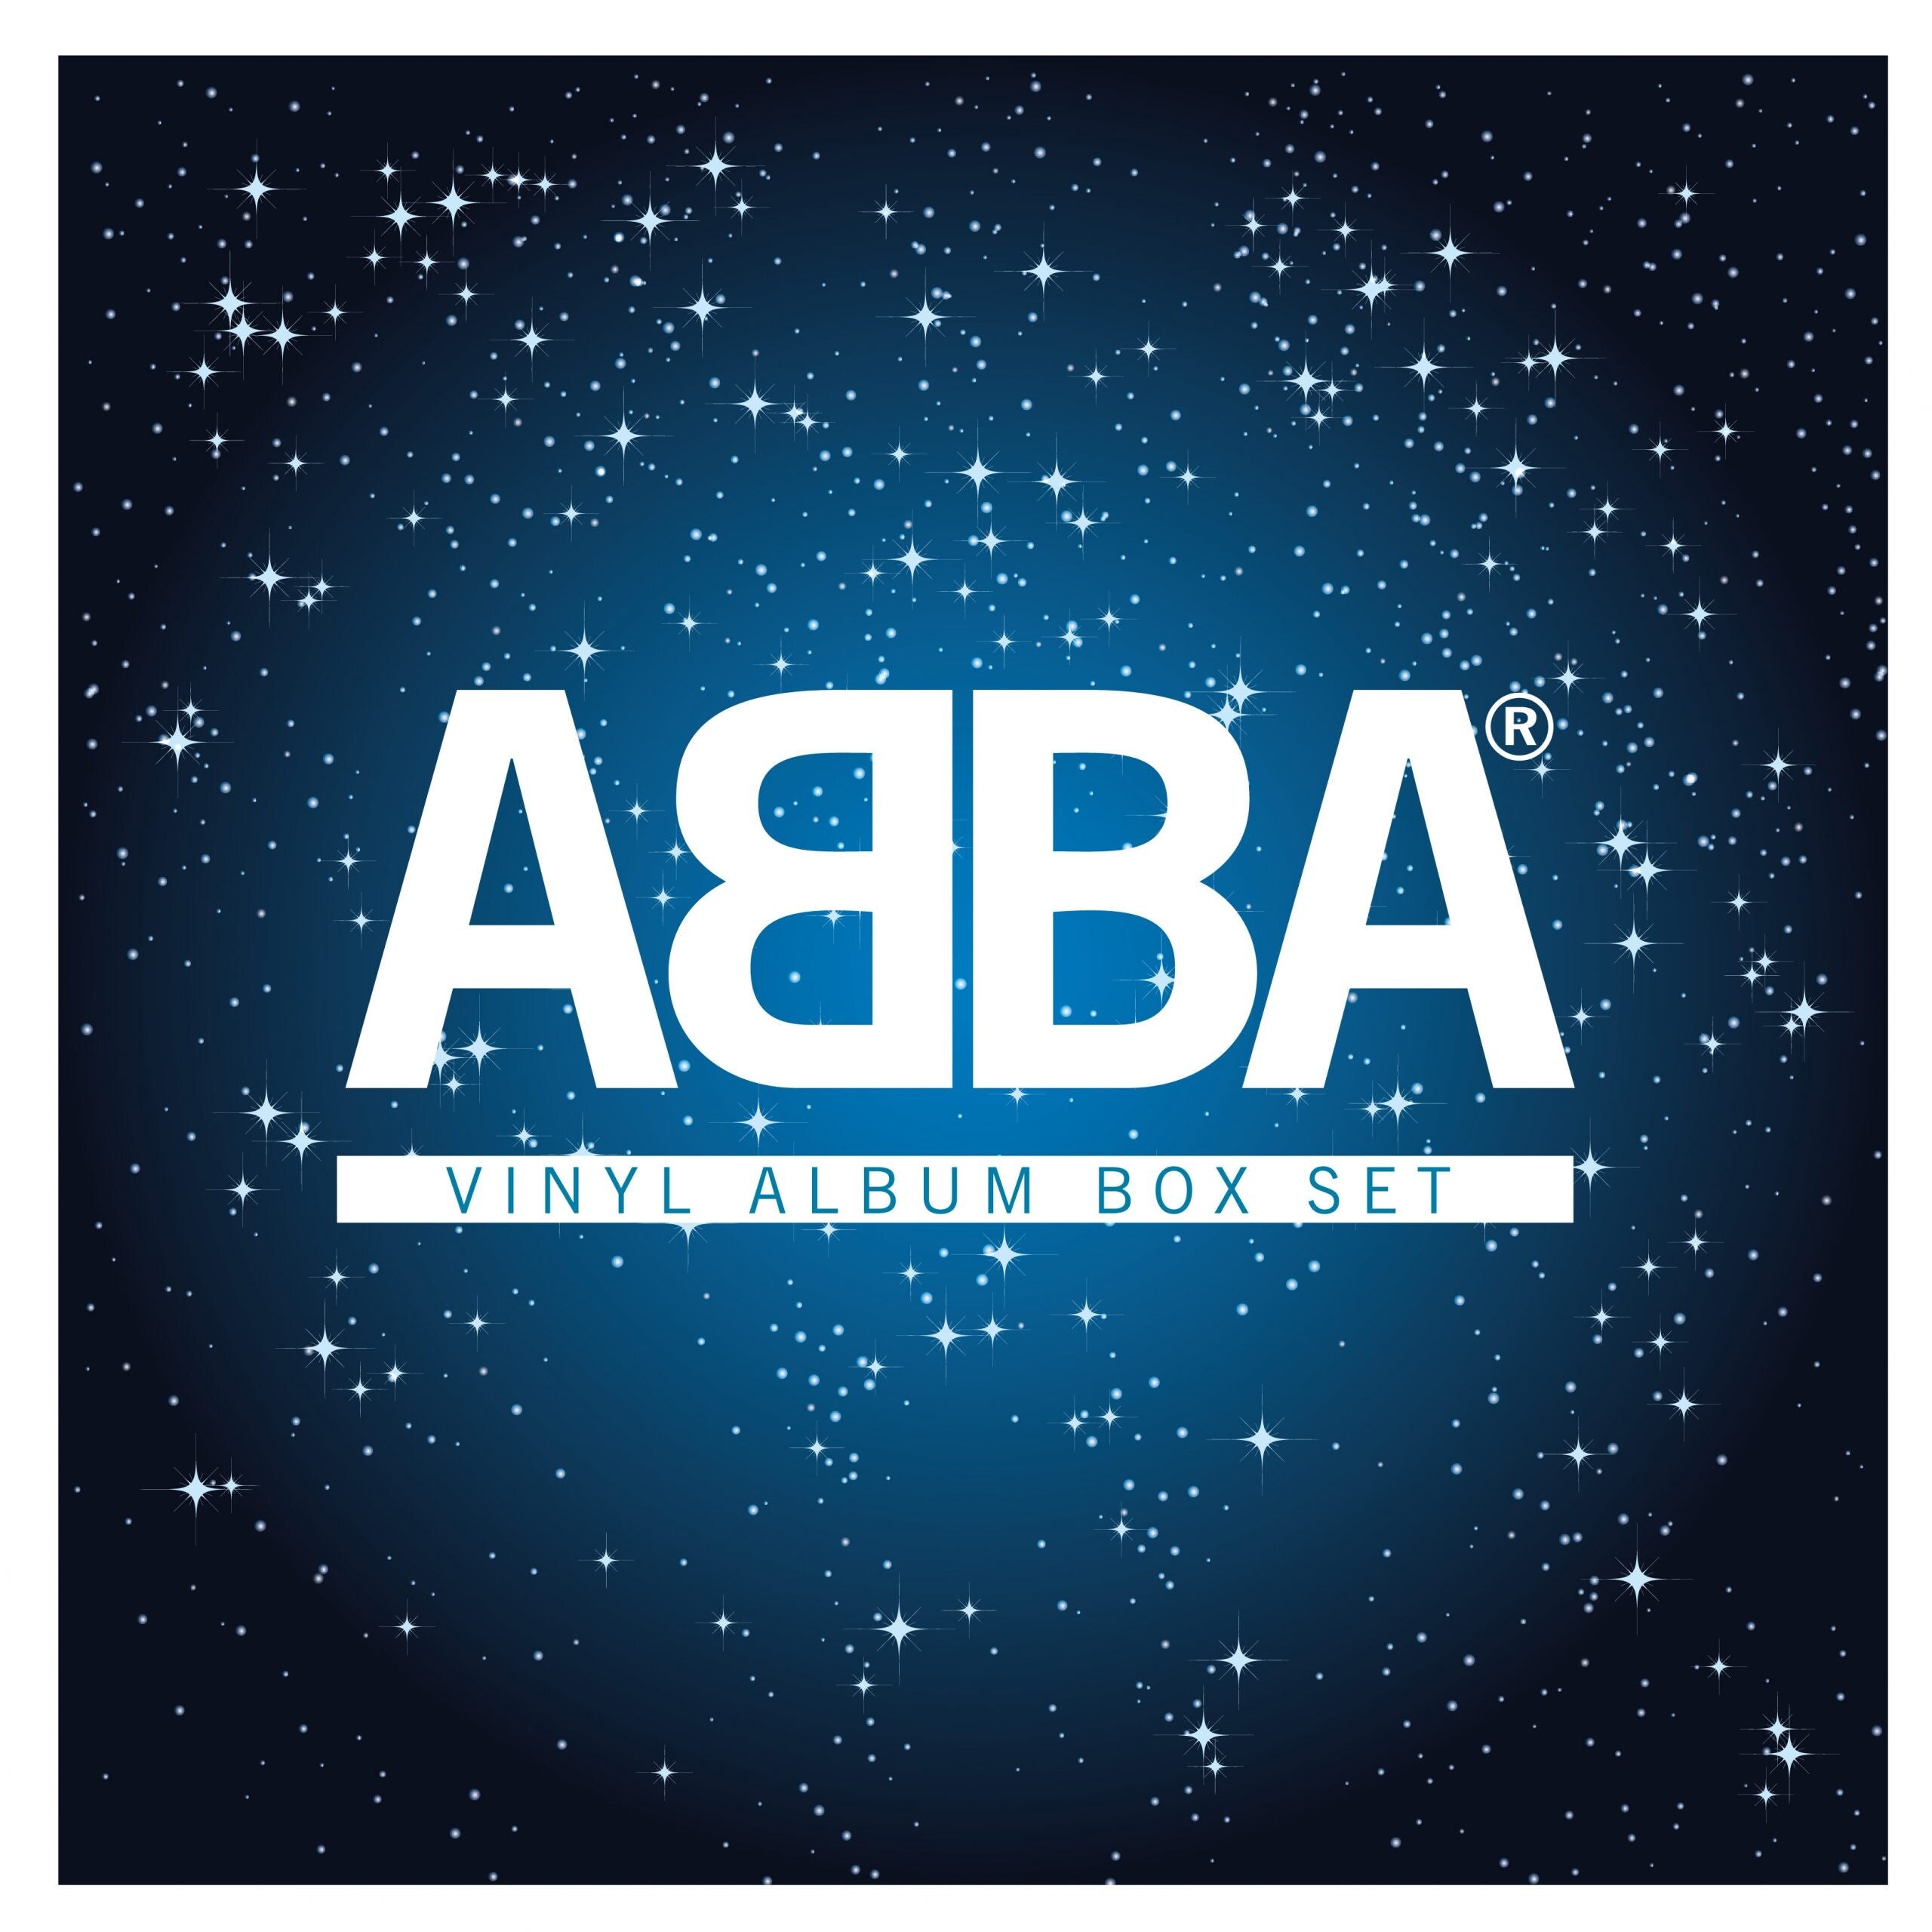 https://images.bravado.de/prod/product-assets/product-asset-data/abba/abba-2/products/141229/web/307276/image-thumb__307276__3000x3000_original/ABBA-Studio-Albums-Vinyl-Album-141229-307276.34459e47.jpg